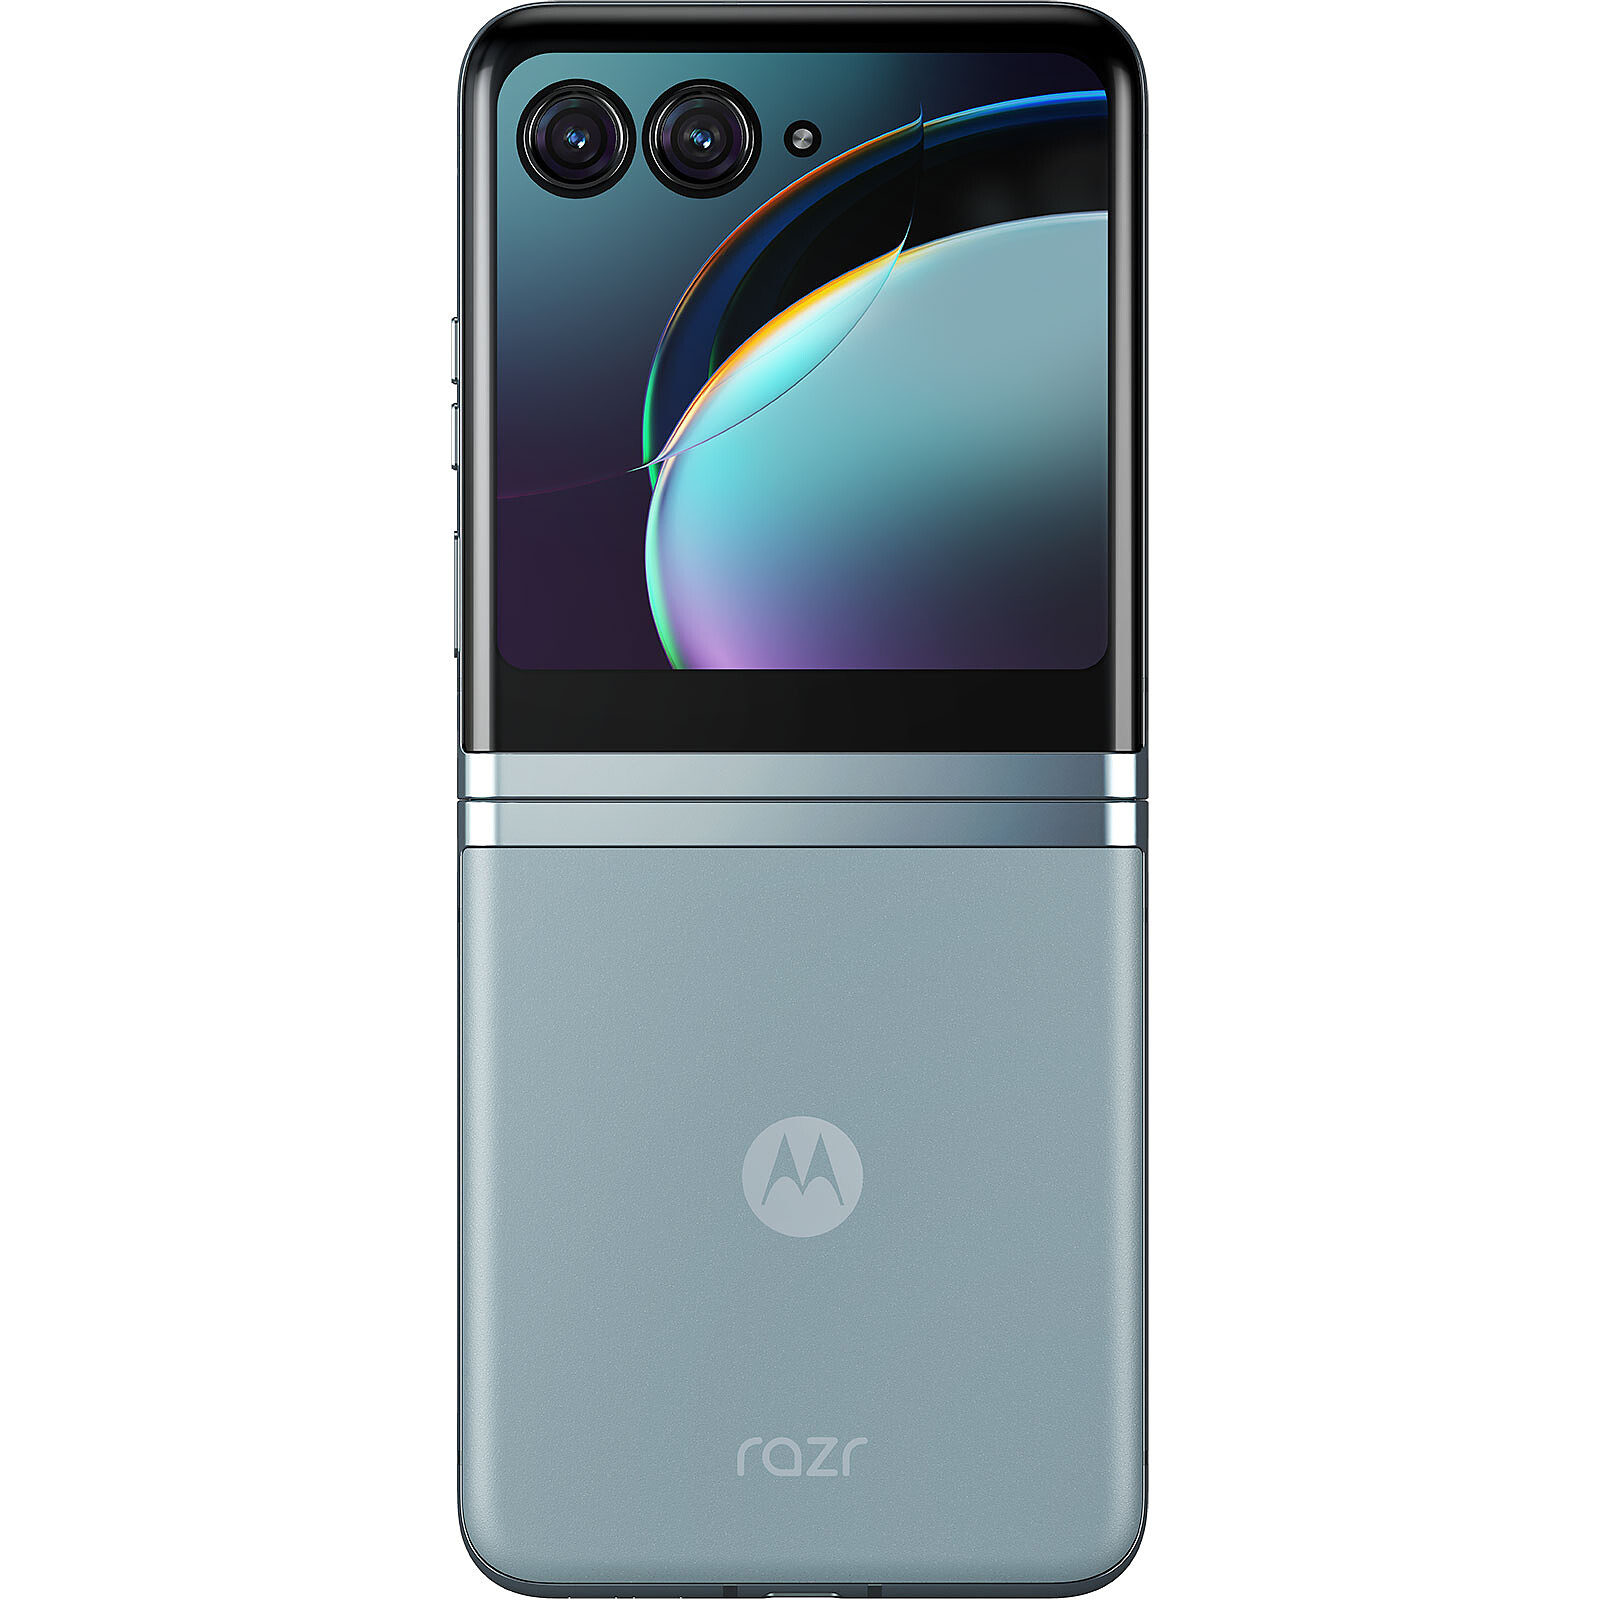 Motorola Razr V4: El Smartphone de pantalla plegable